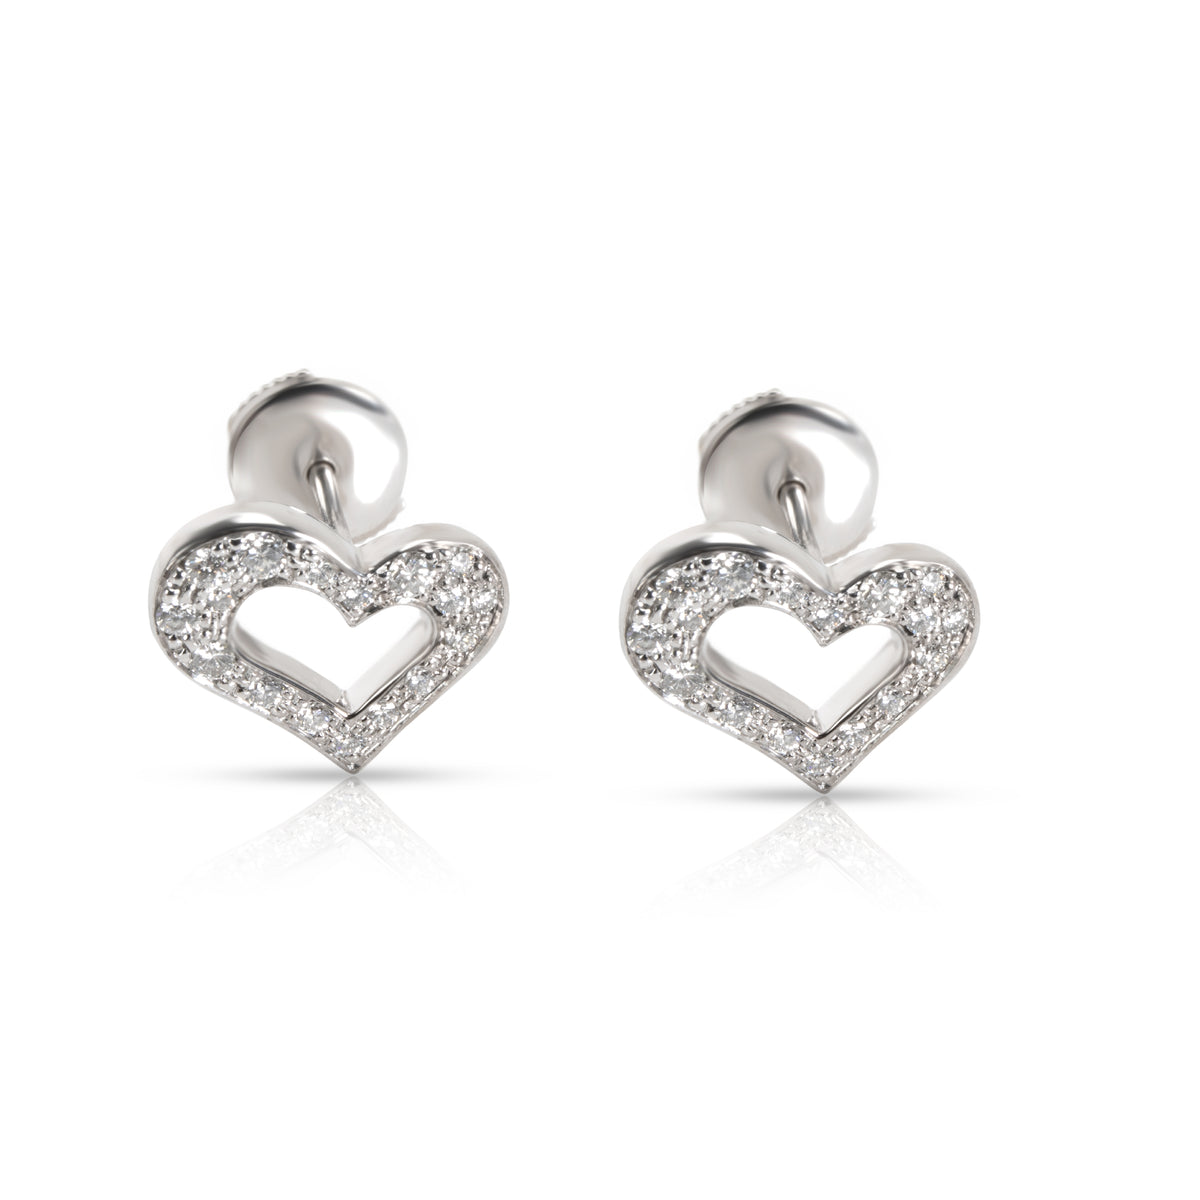 Piaget Diamond Heart Stud Earrings in 18K White Gold (0.22 CTW)